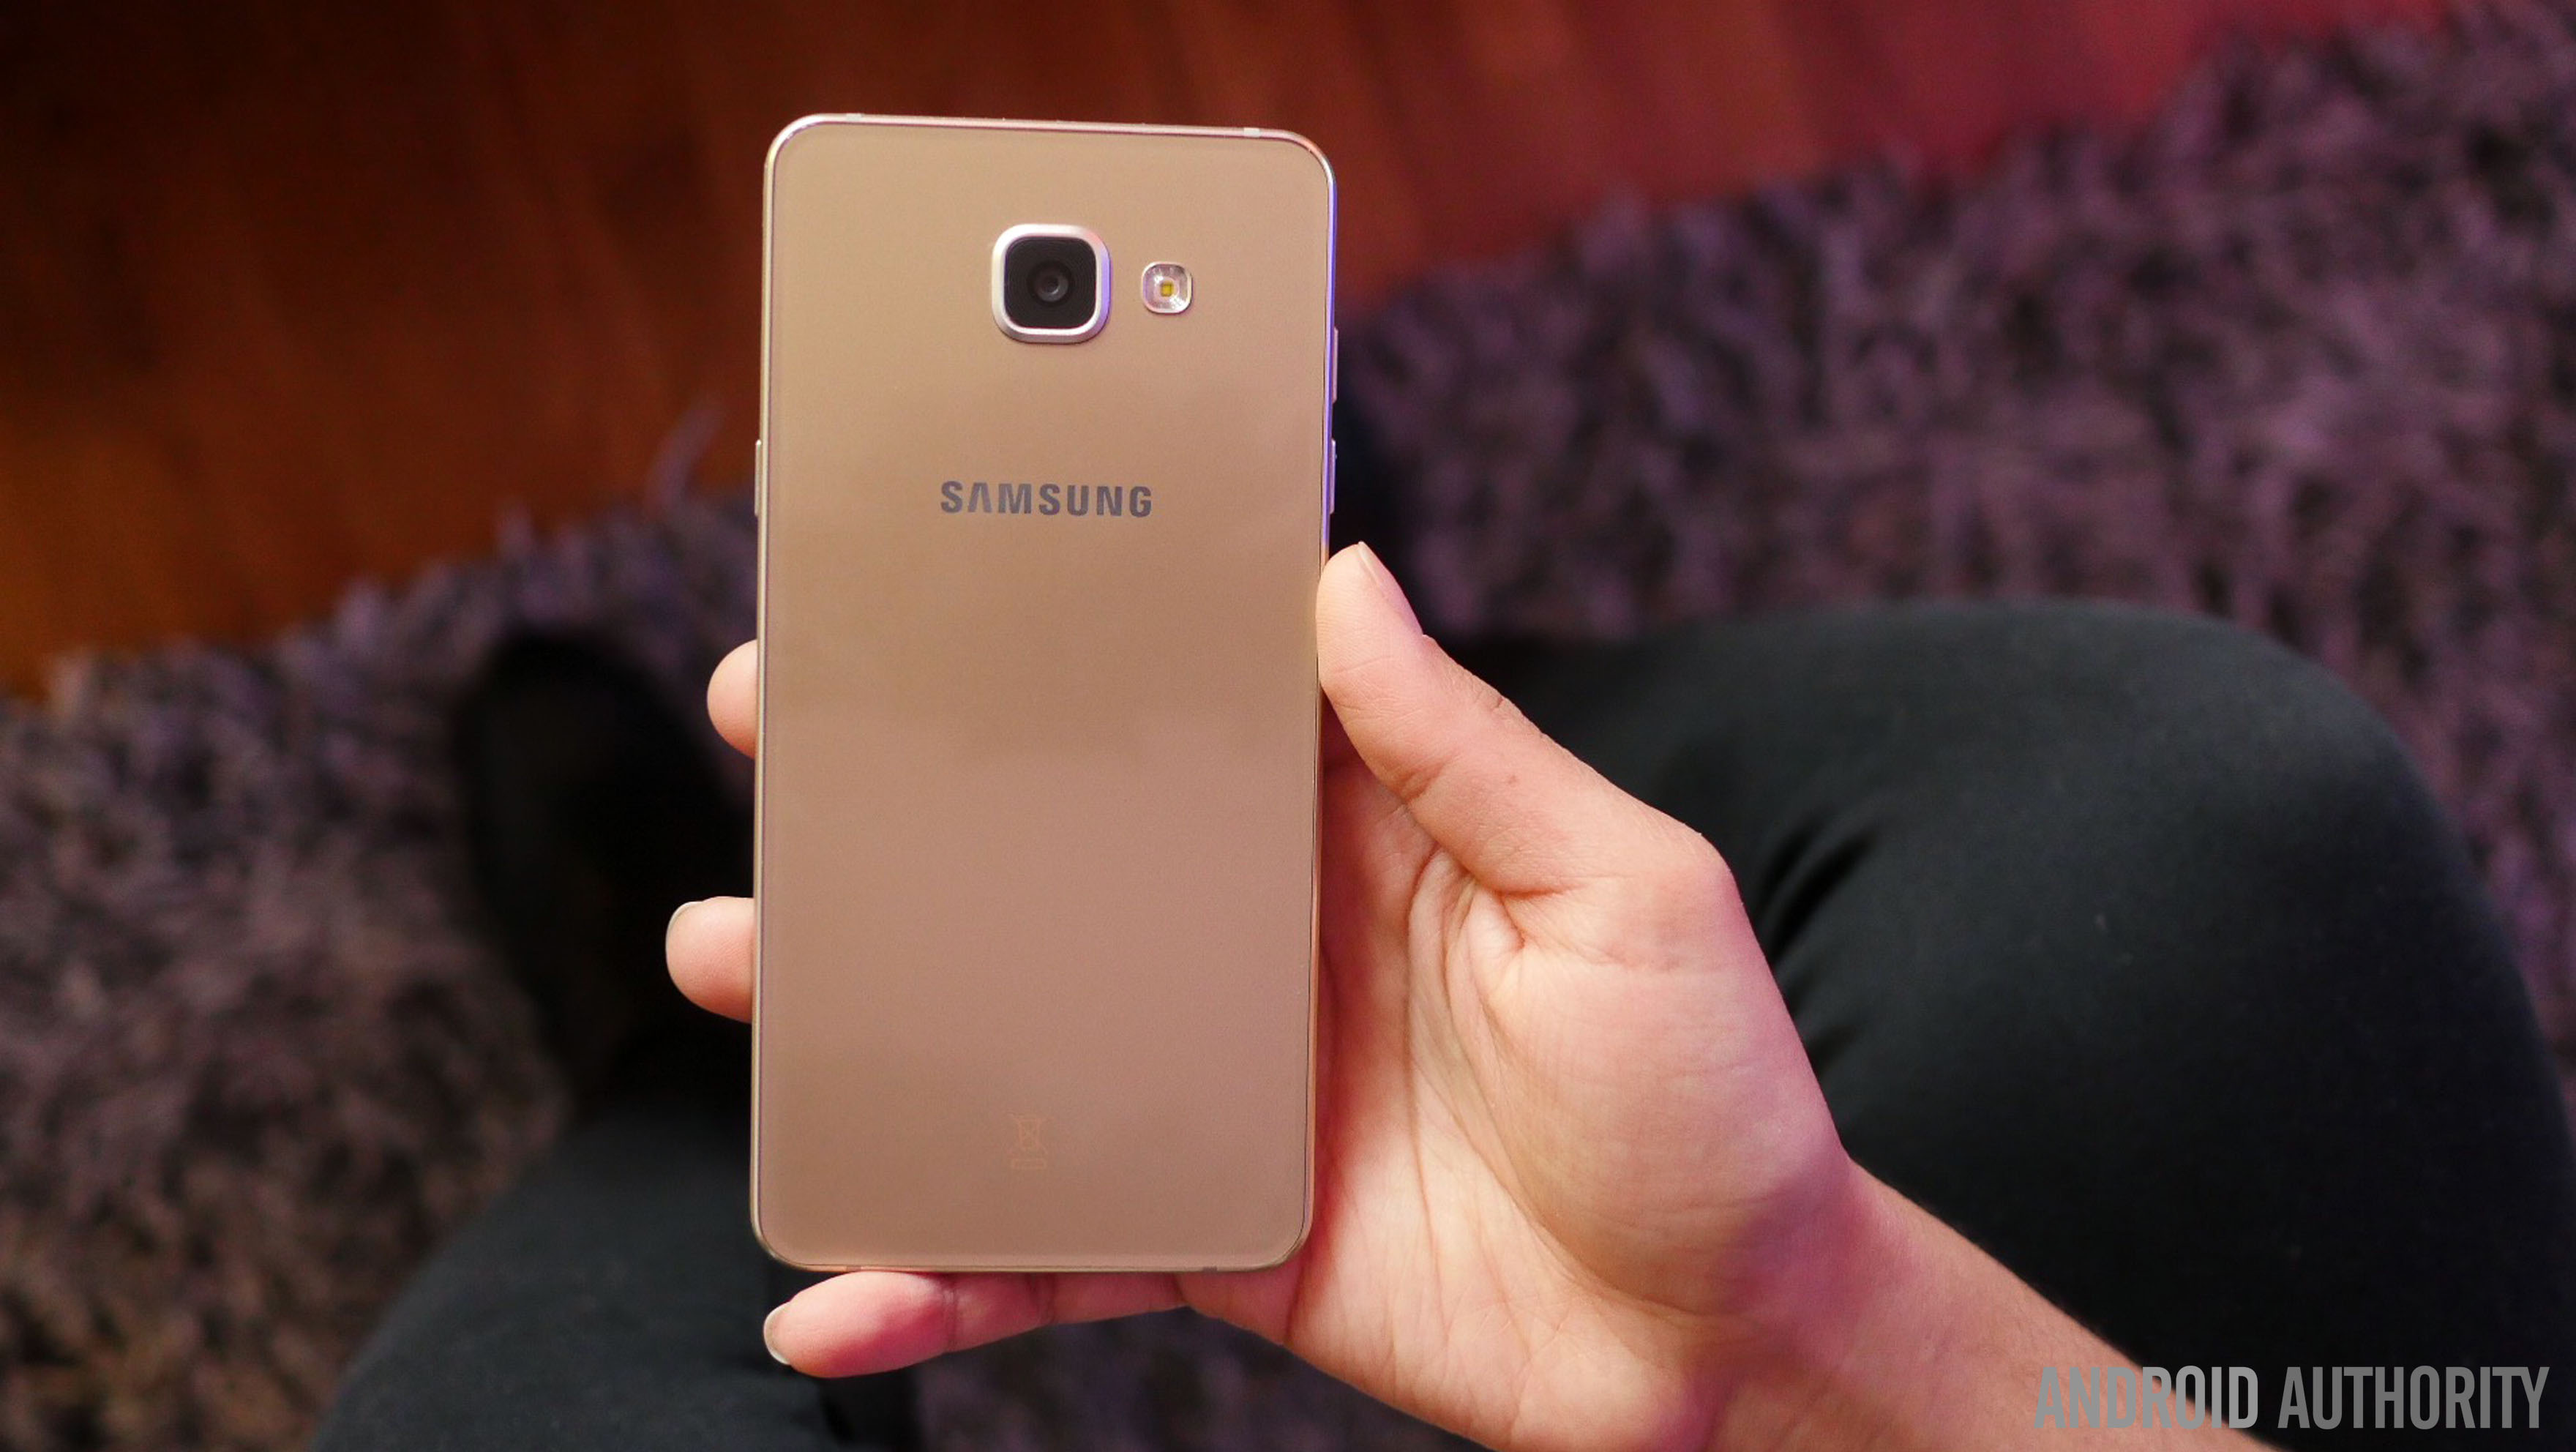 Keelholte Wonderbaarlijk doolhof Samsung Galaxy A5 (2016) review - Android Authority